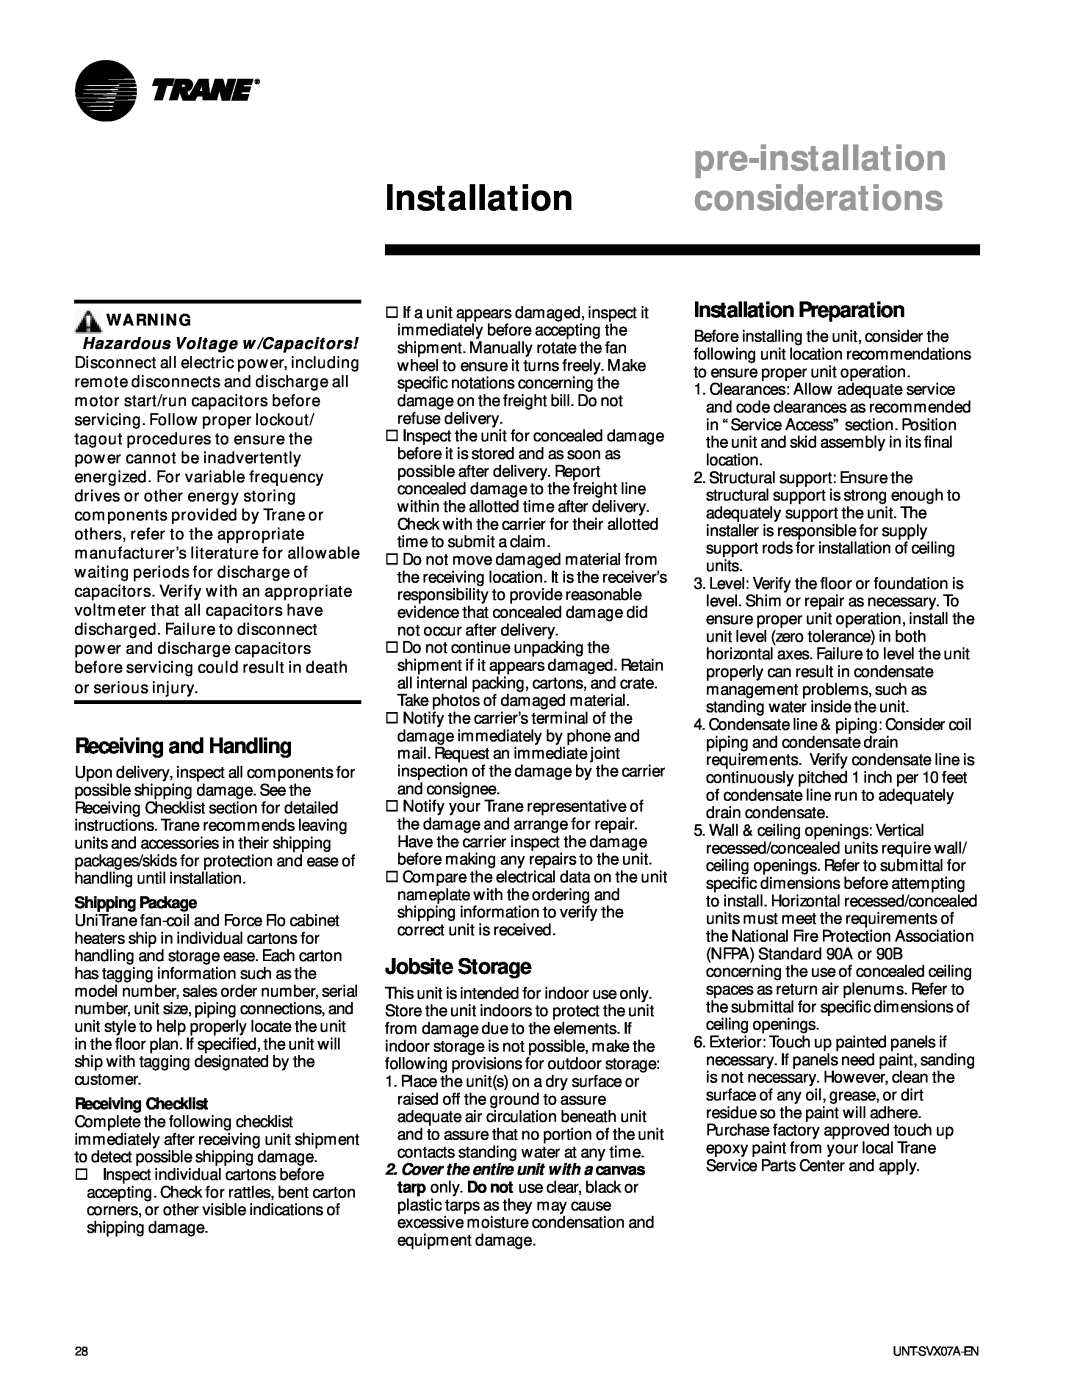 Trane UNT-SVX07A-EN manual pre-installation Installation considerations, Receiving and Handling, Jobsite Storage 